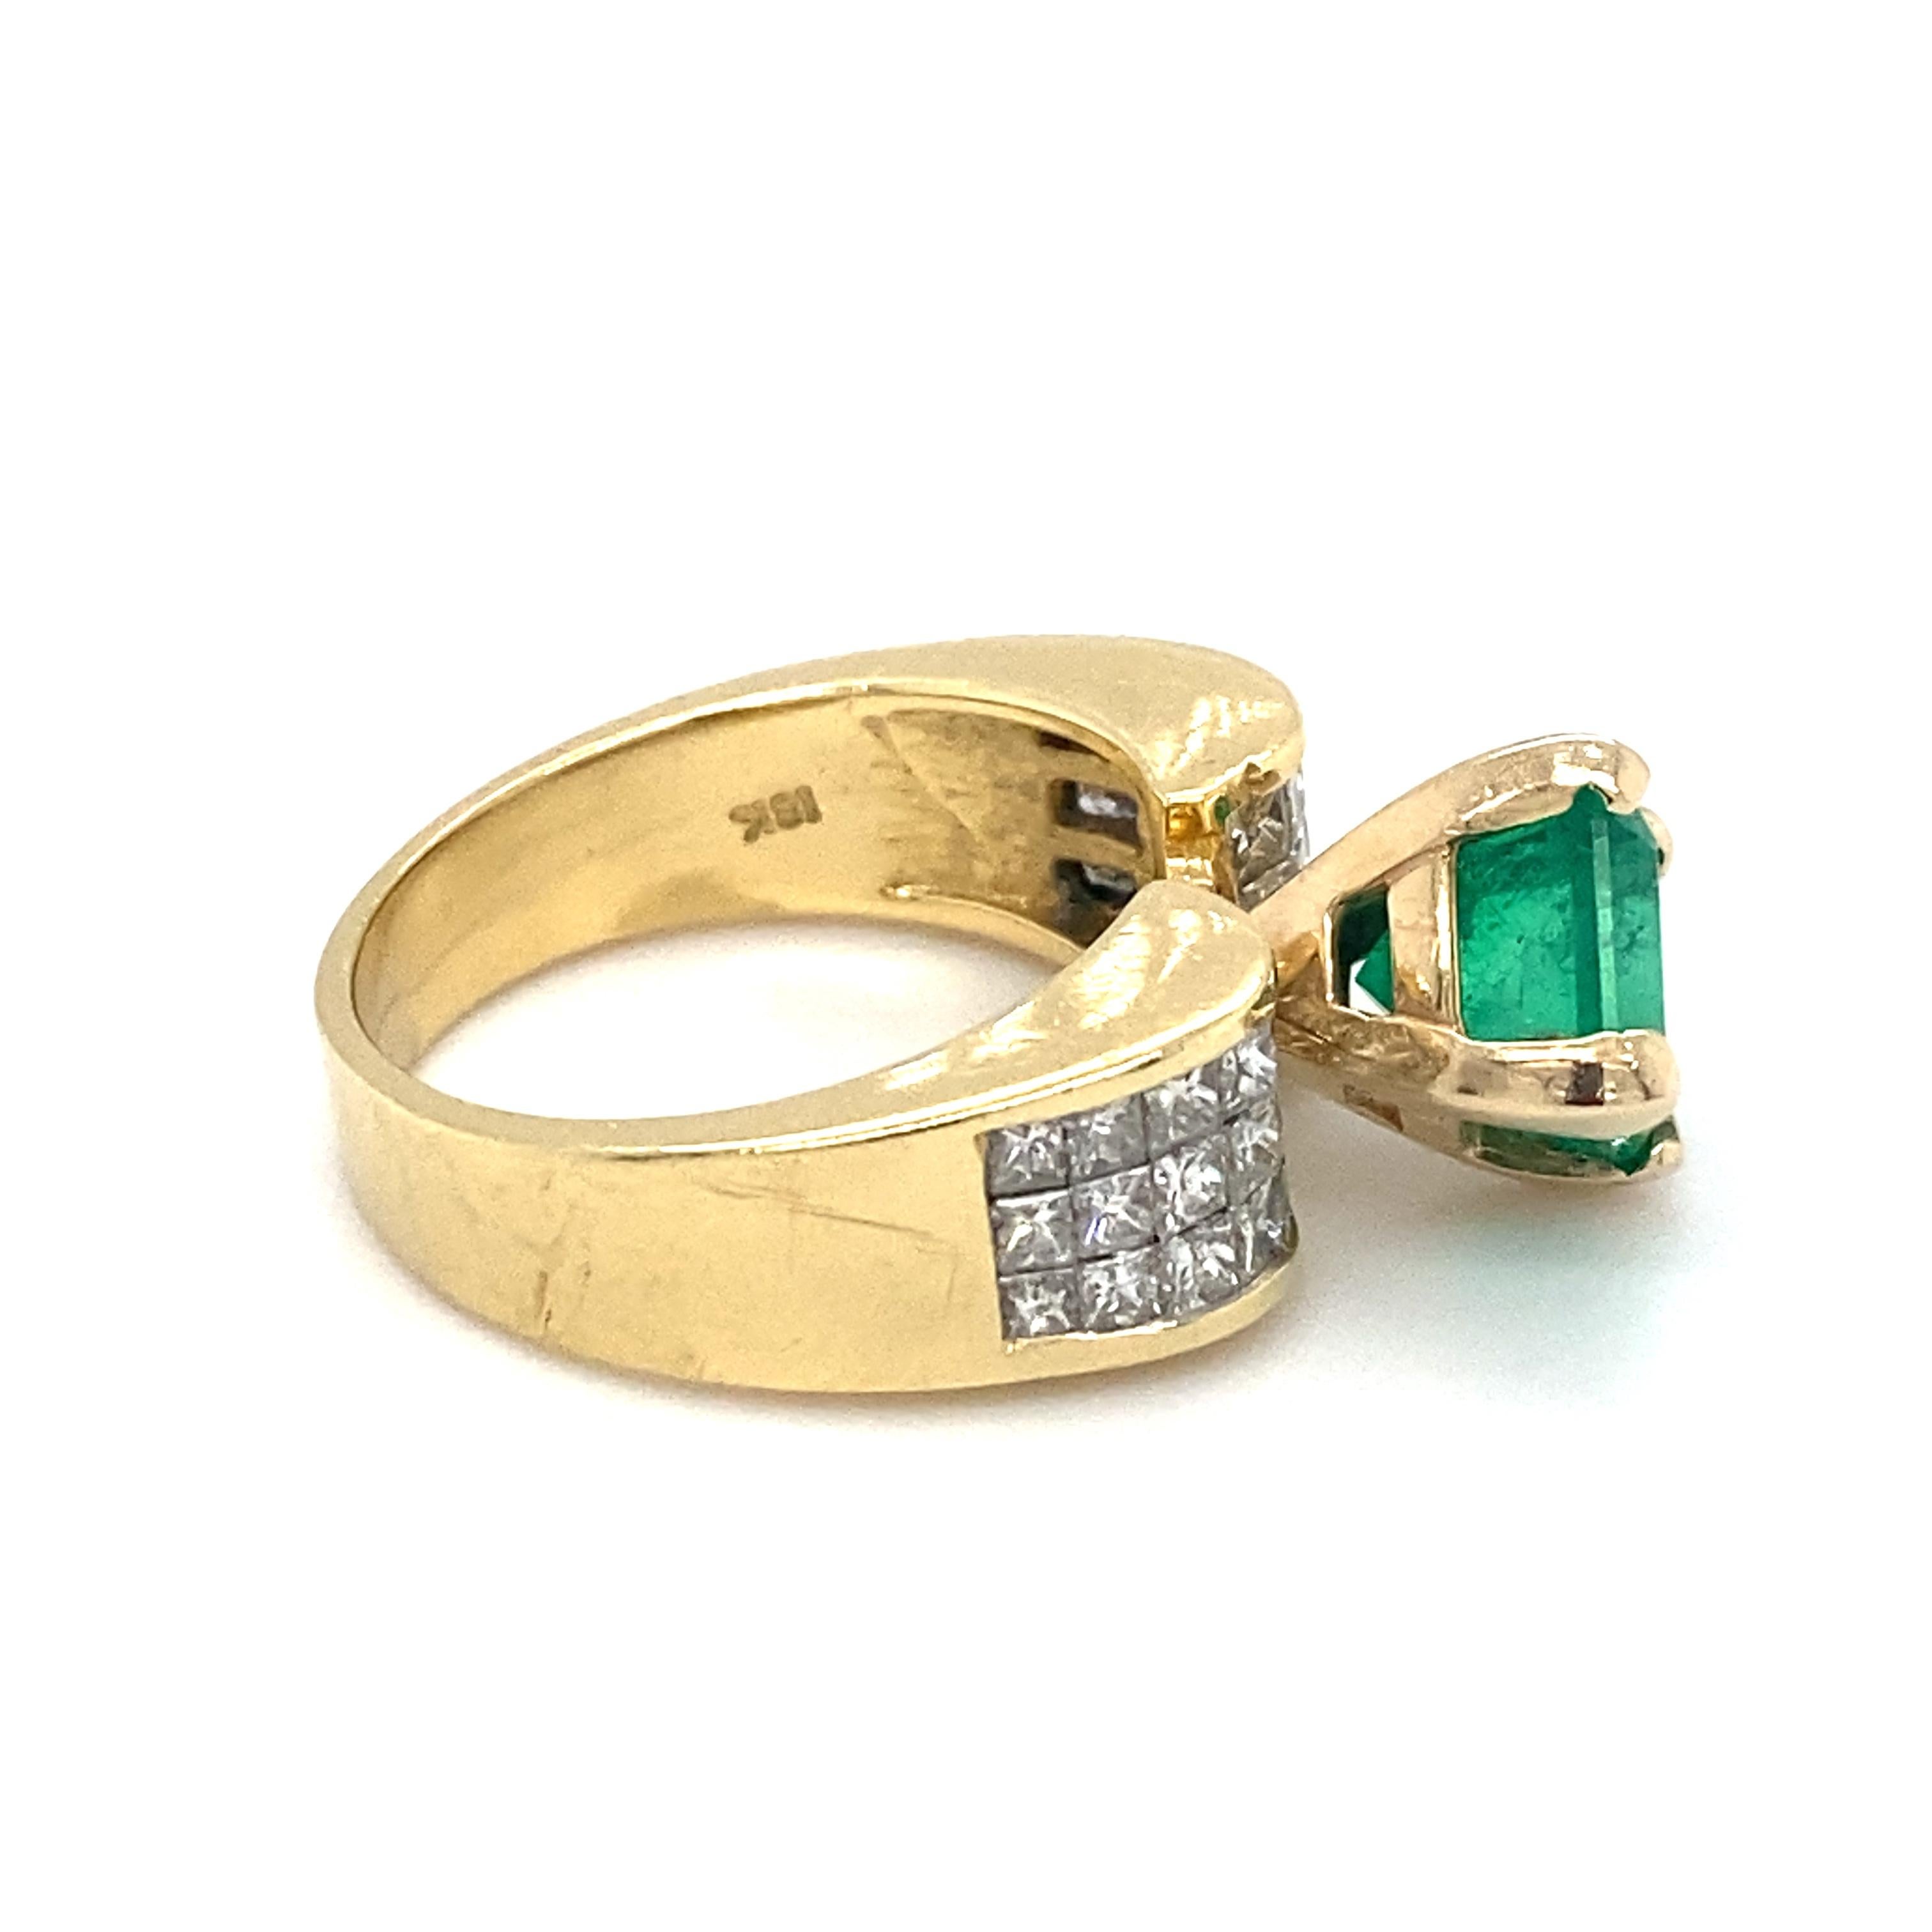 Modern Le Vian 5 Carat Emerald and Diamond Ring in 18 Karat Gold